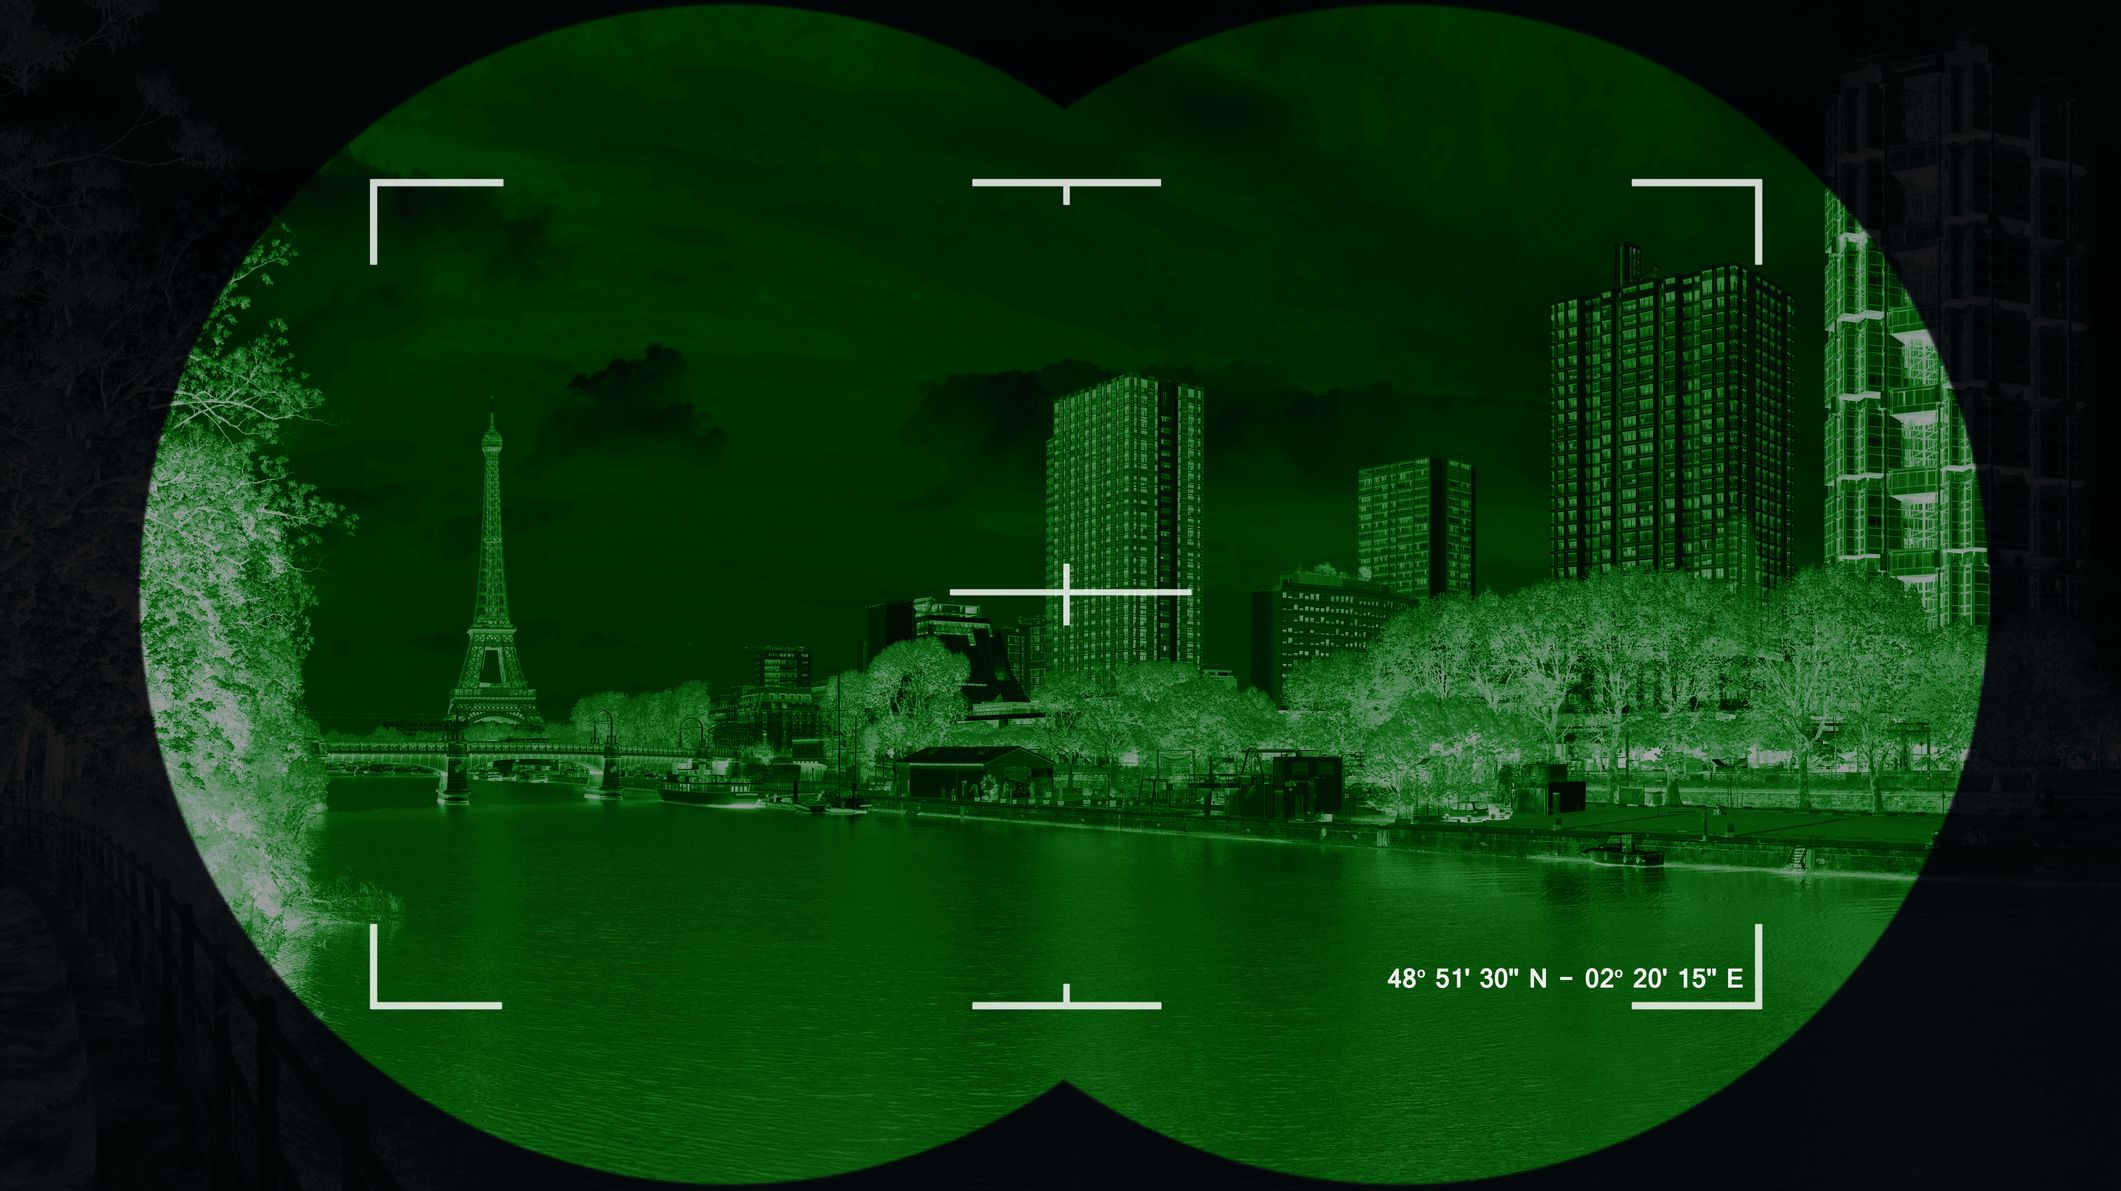 xray vision night vision infrared